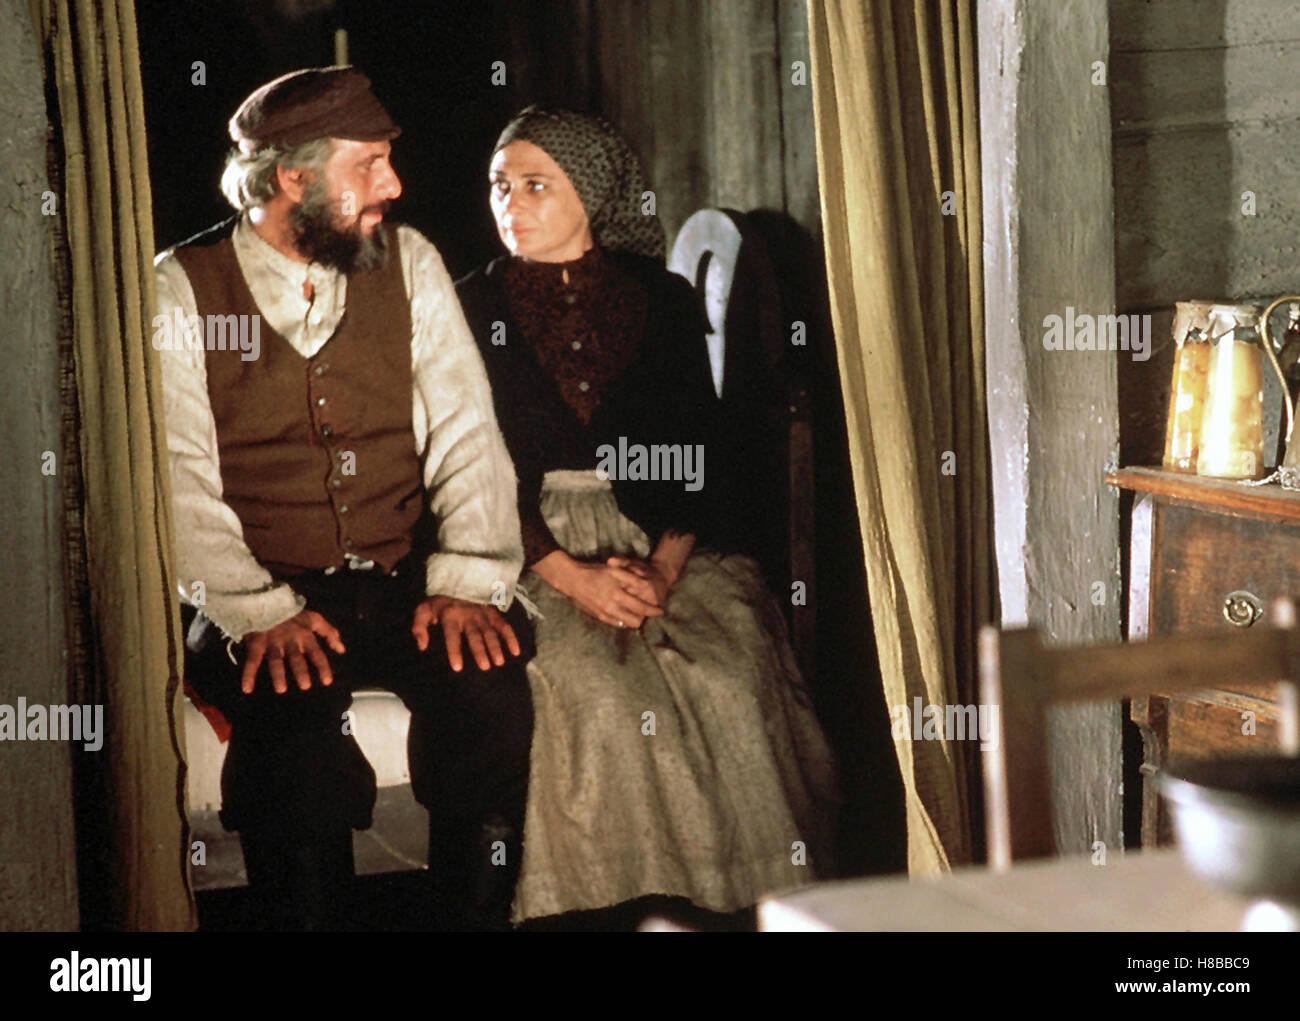 Anatevka, (FIDDLER ON THE ROOF) USA 1971, Regie: Norman Jewison, CHAIM TOPOL, NORMA CRANE, Key: Paar, Bettkante Stock Photo